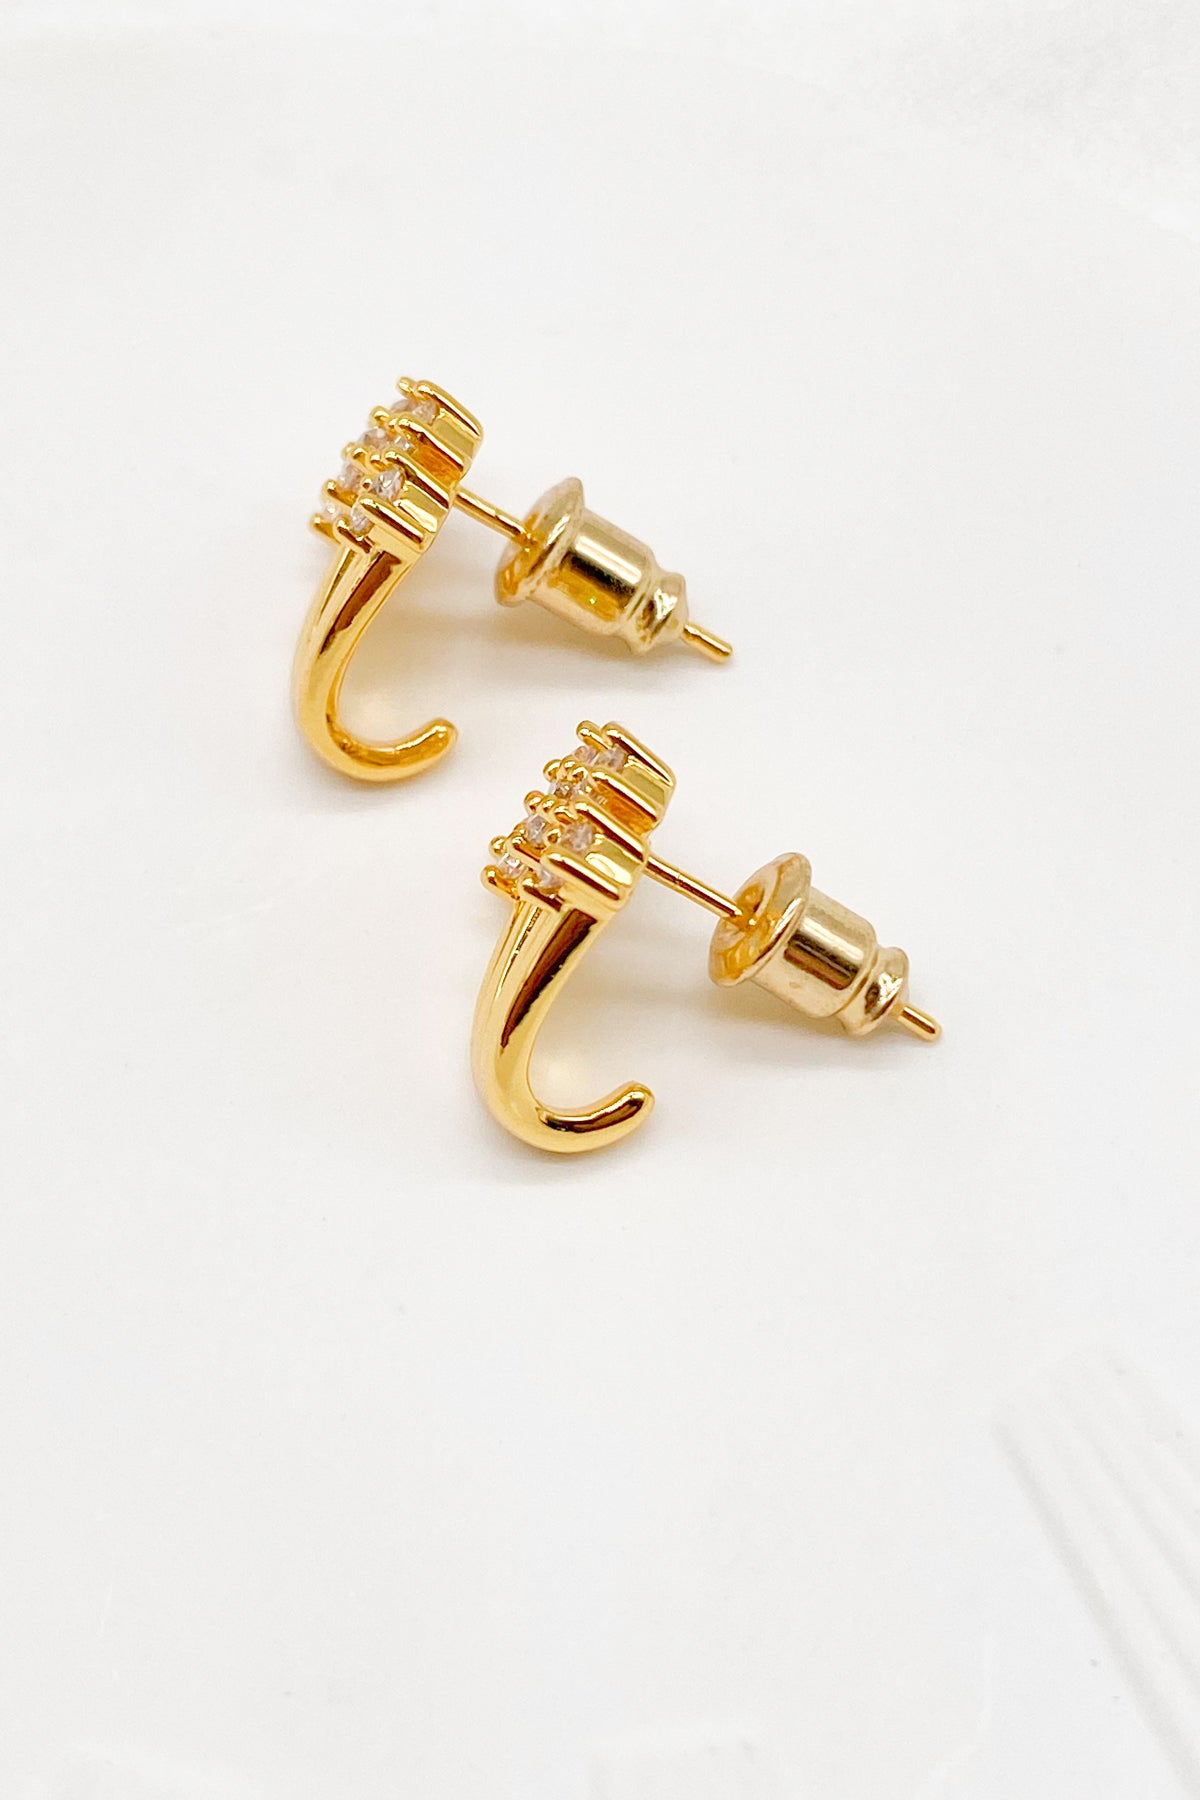 Alisa Gold Mini Cuff Earrings 0000s 0003 Background copy 137